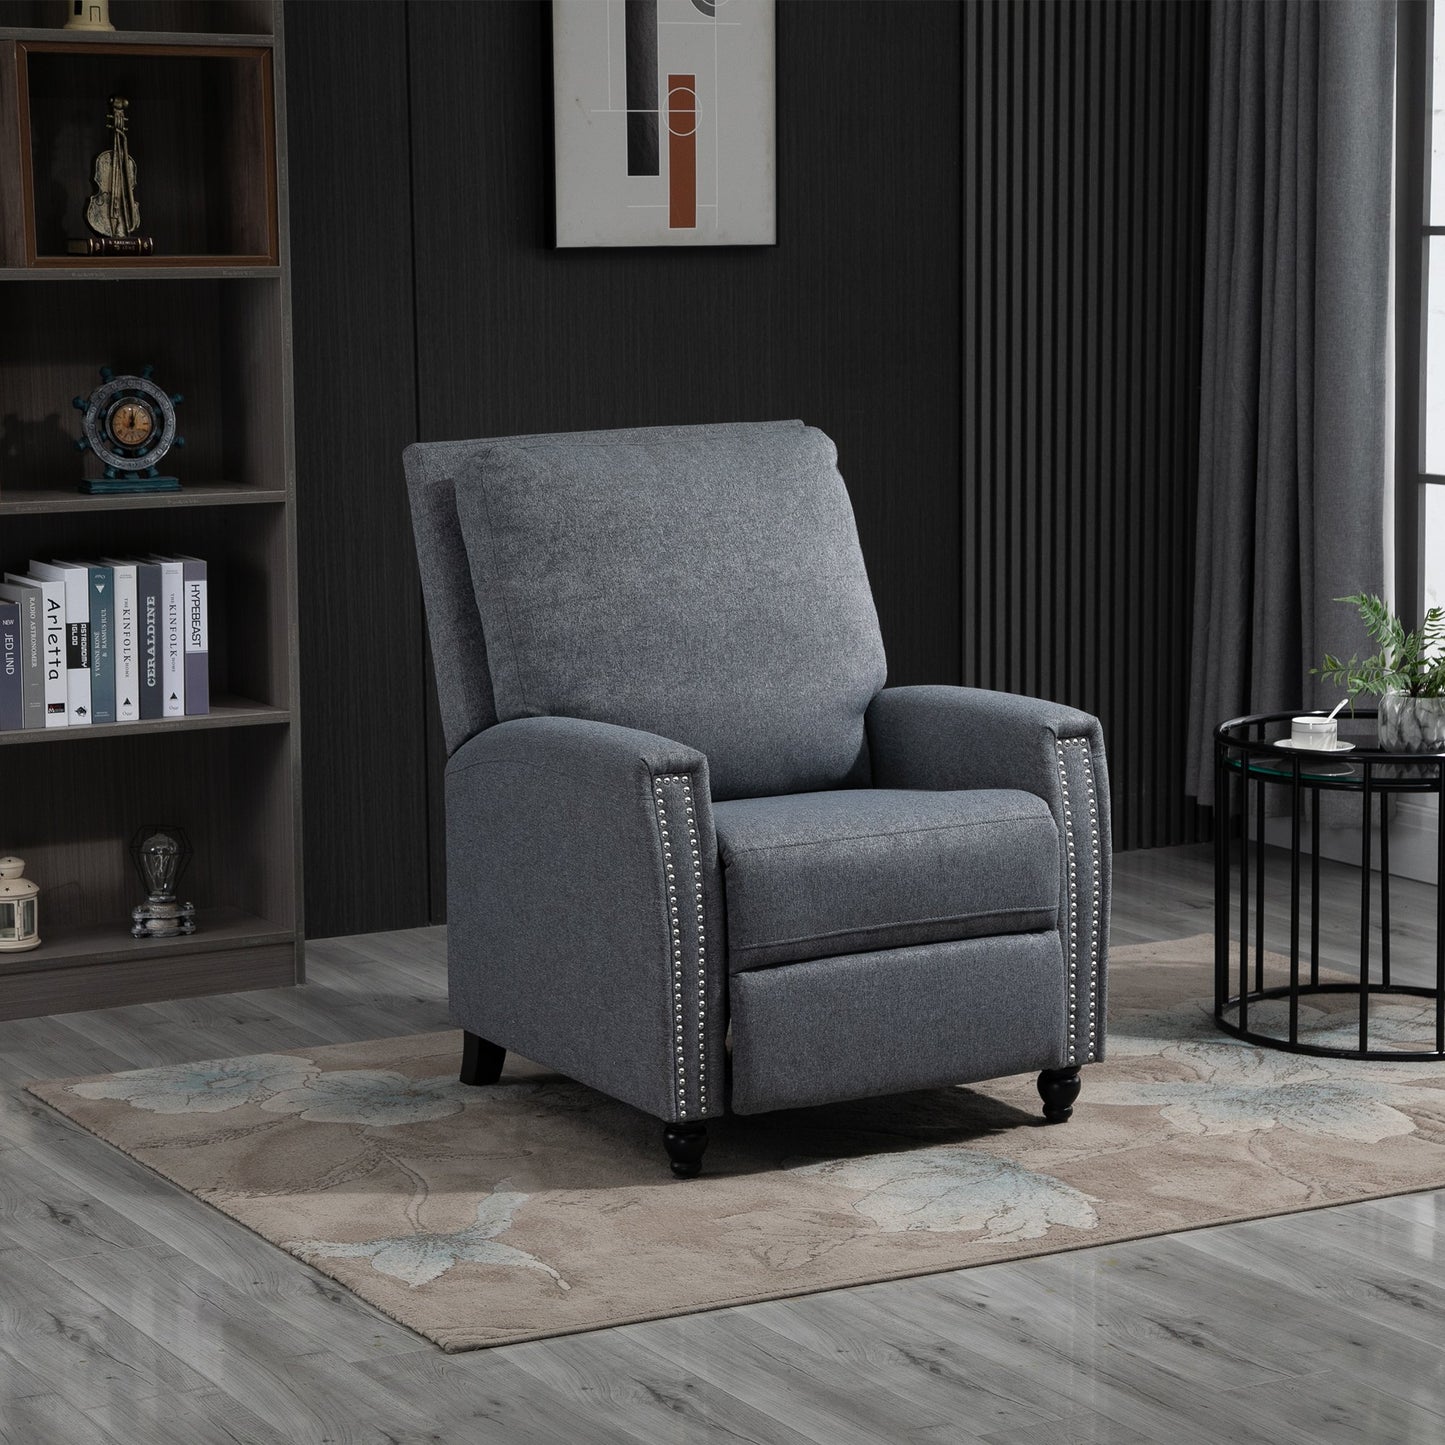 HOMCOM Fabric Single Sofa Chair Recliner Armchair w/ Footpad